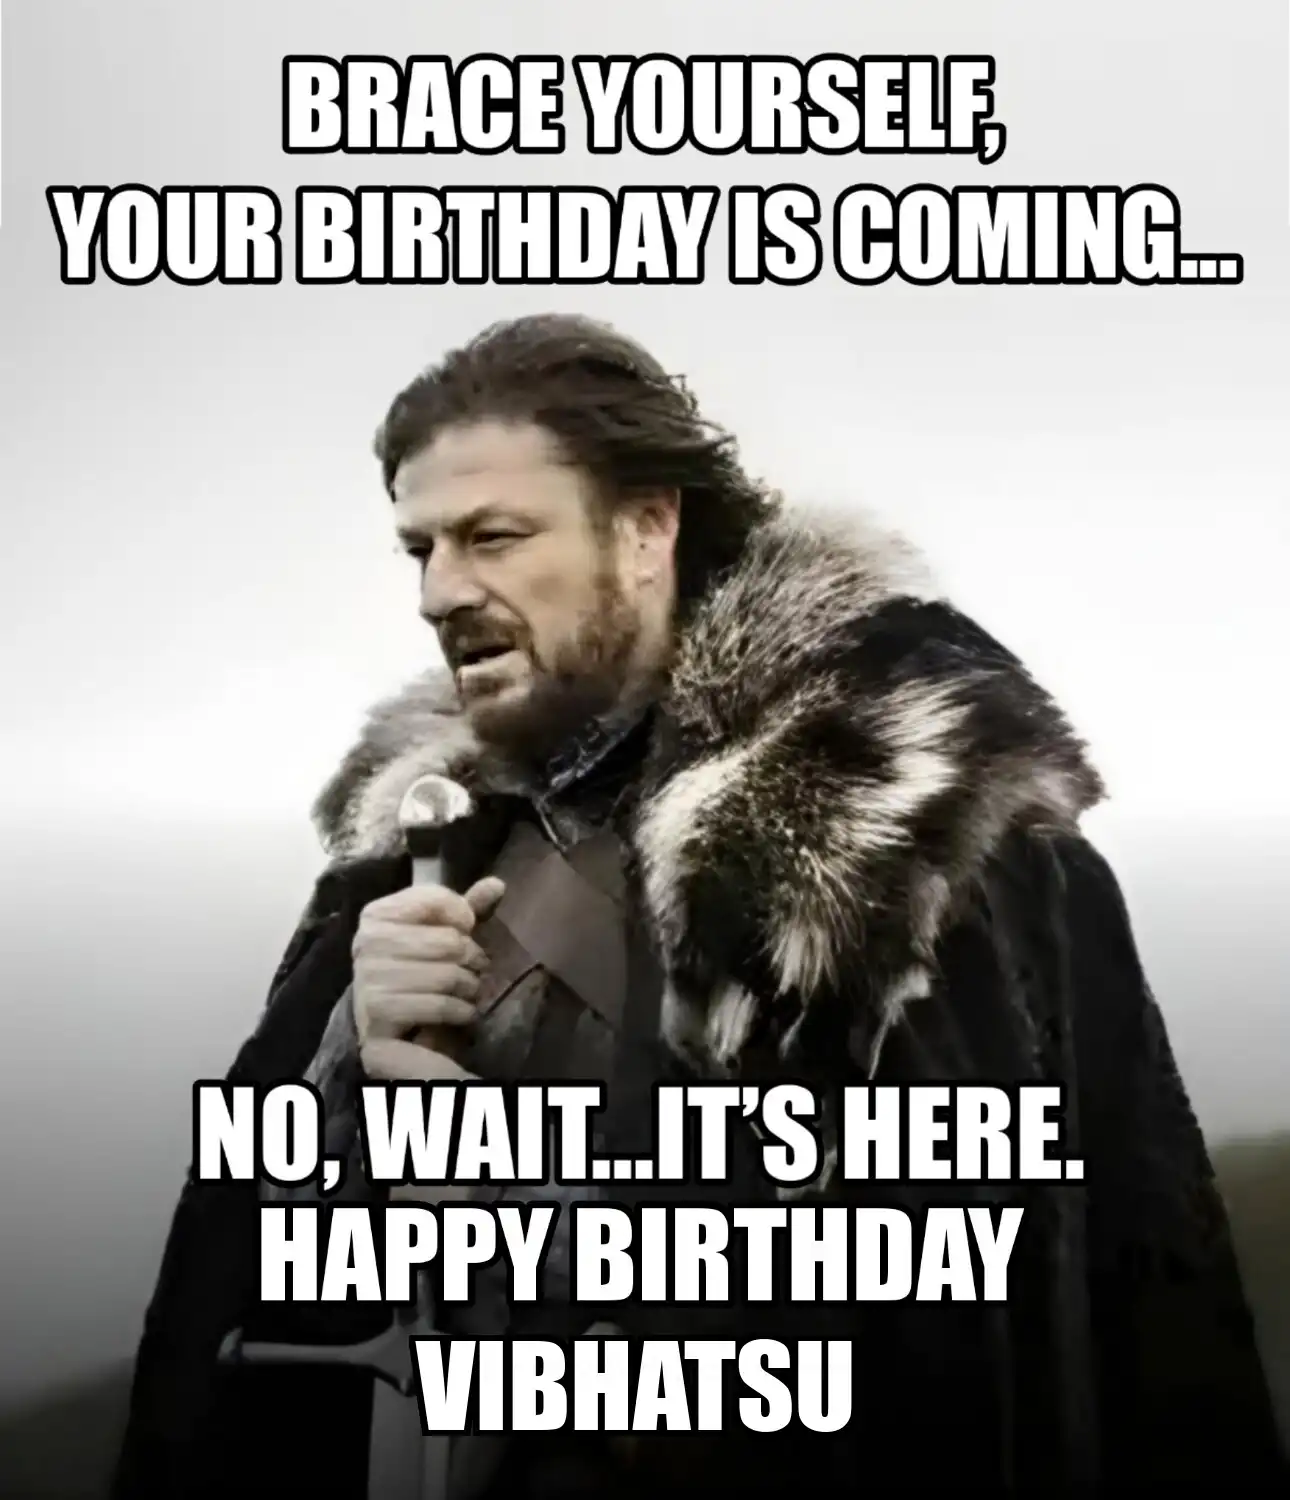 Happy Birthday Vibhatsu Brace Yourself Your Birthday Is Coming Meme